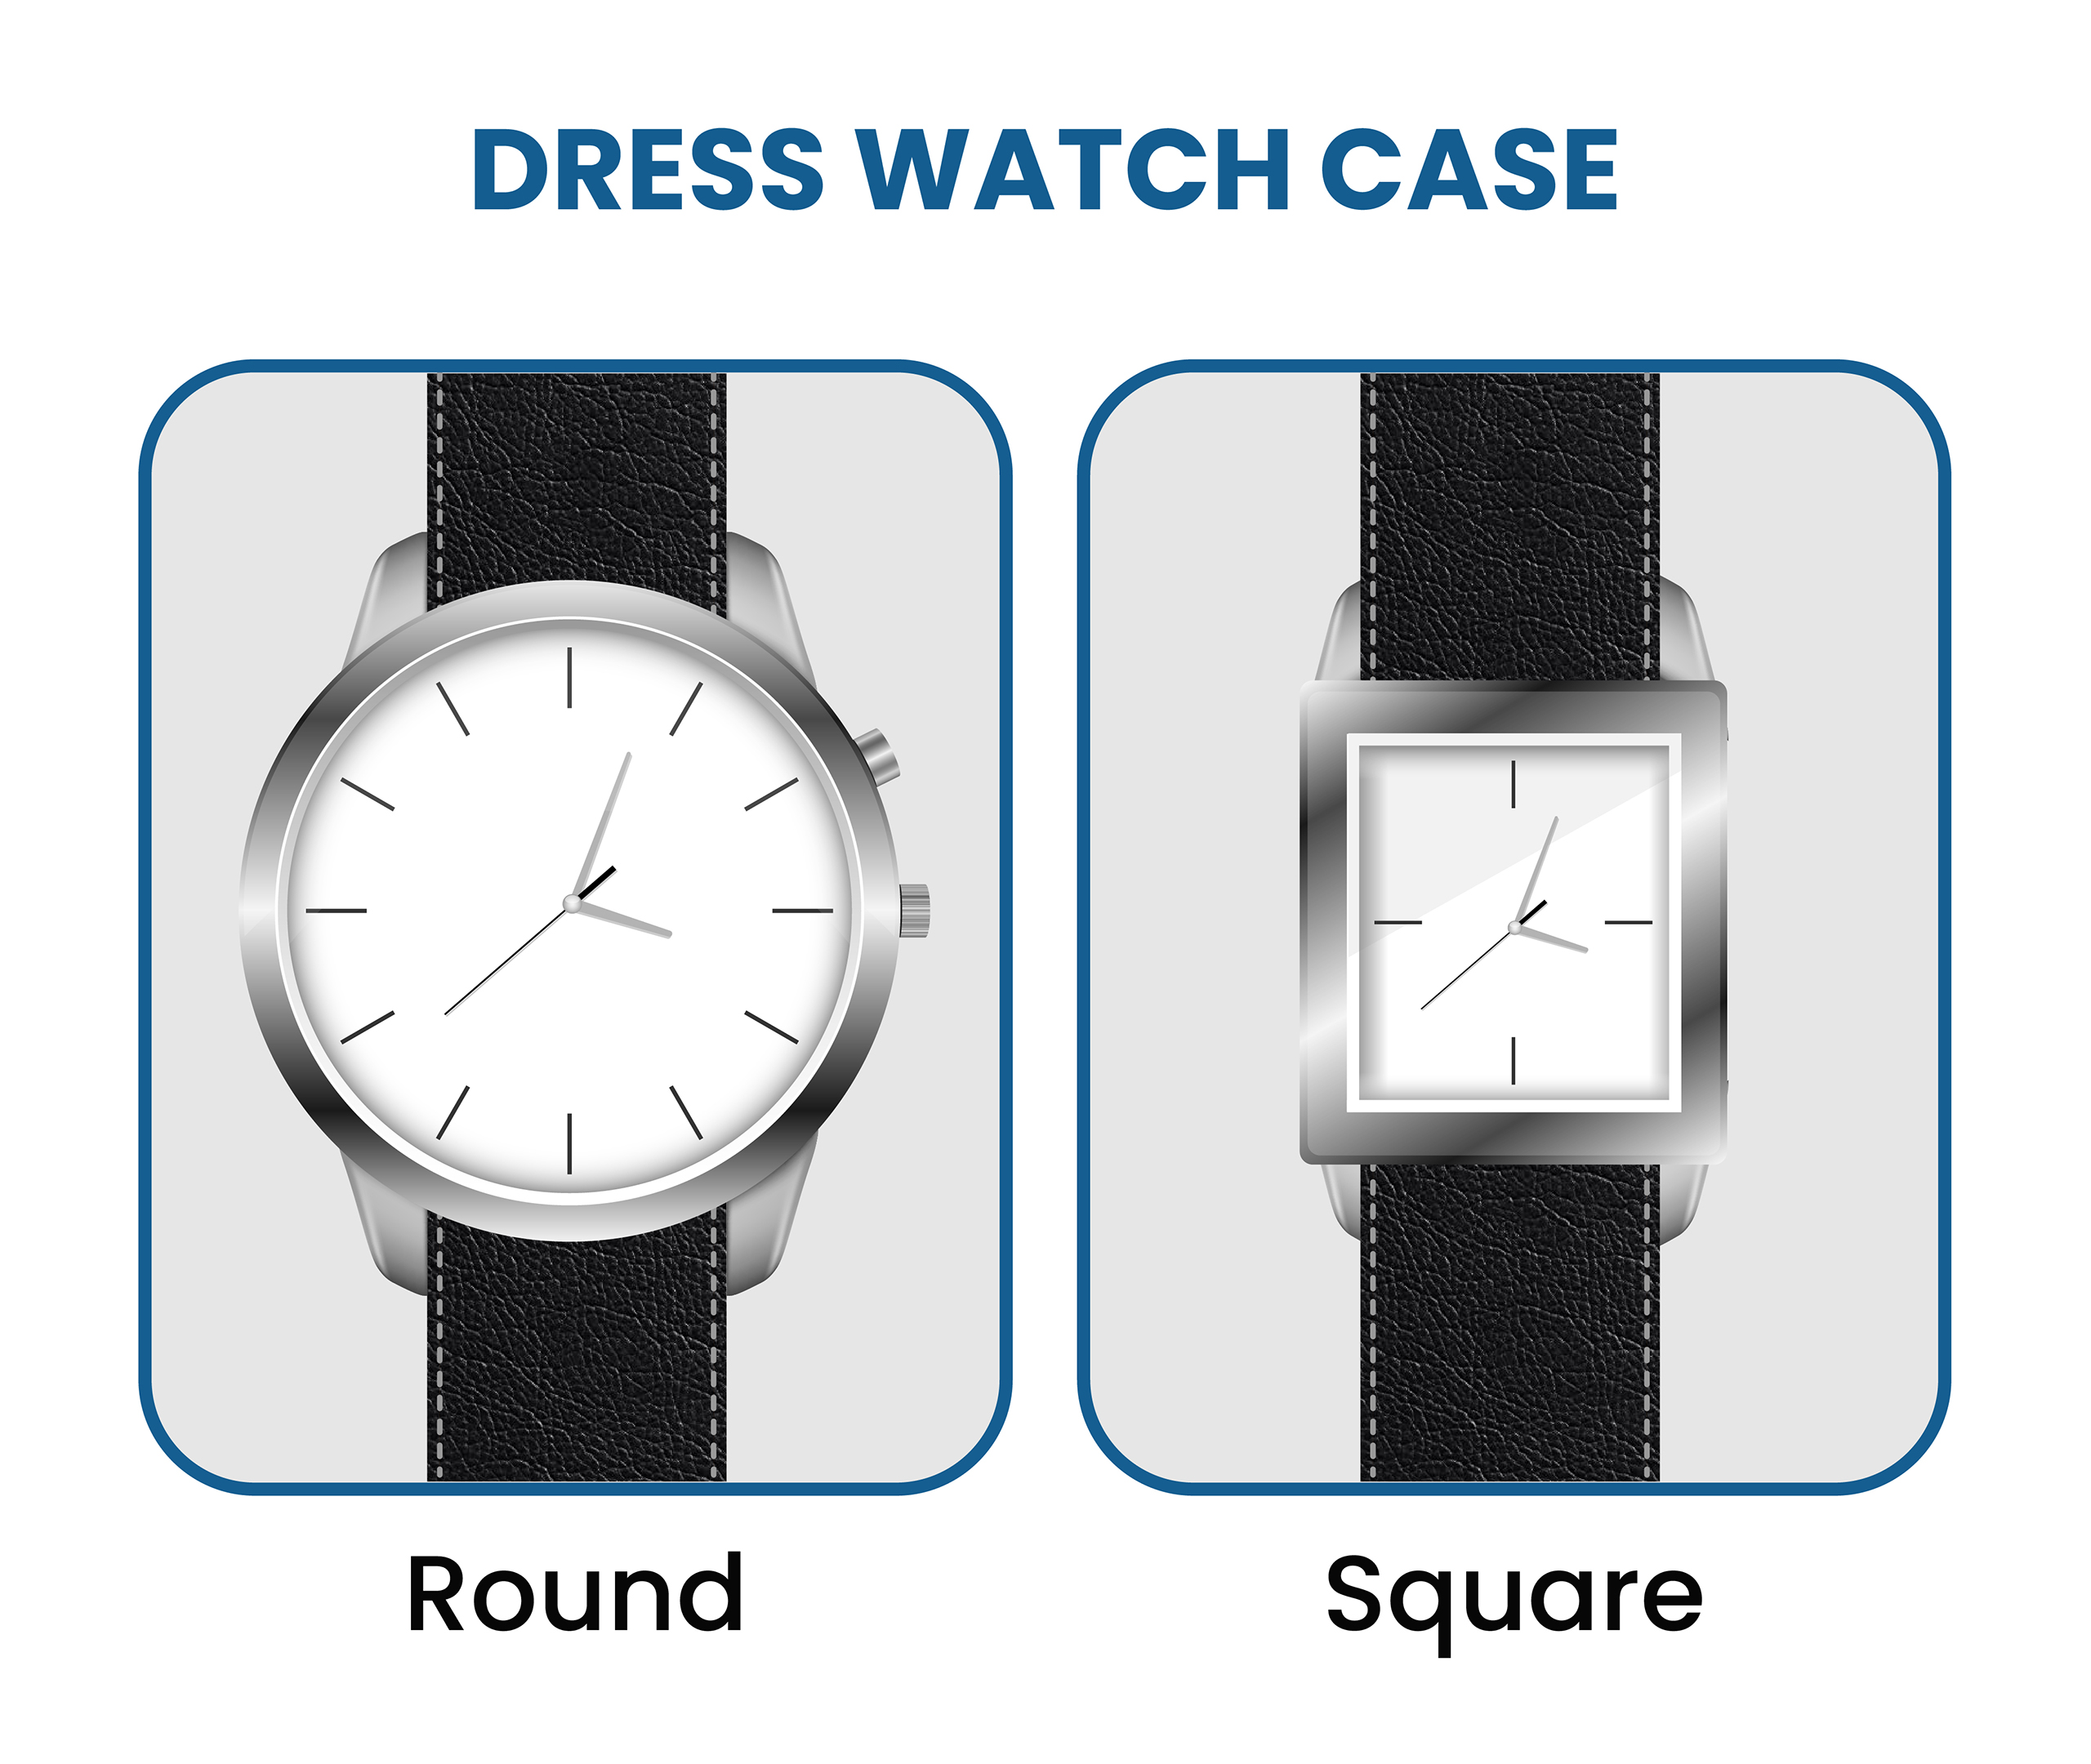 dress watch case shape: round vs. square